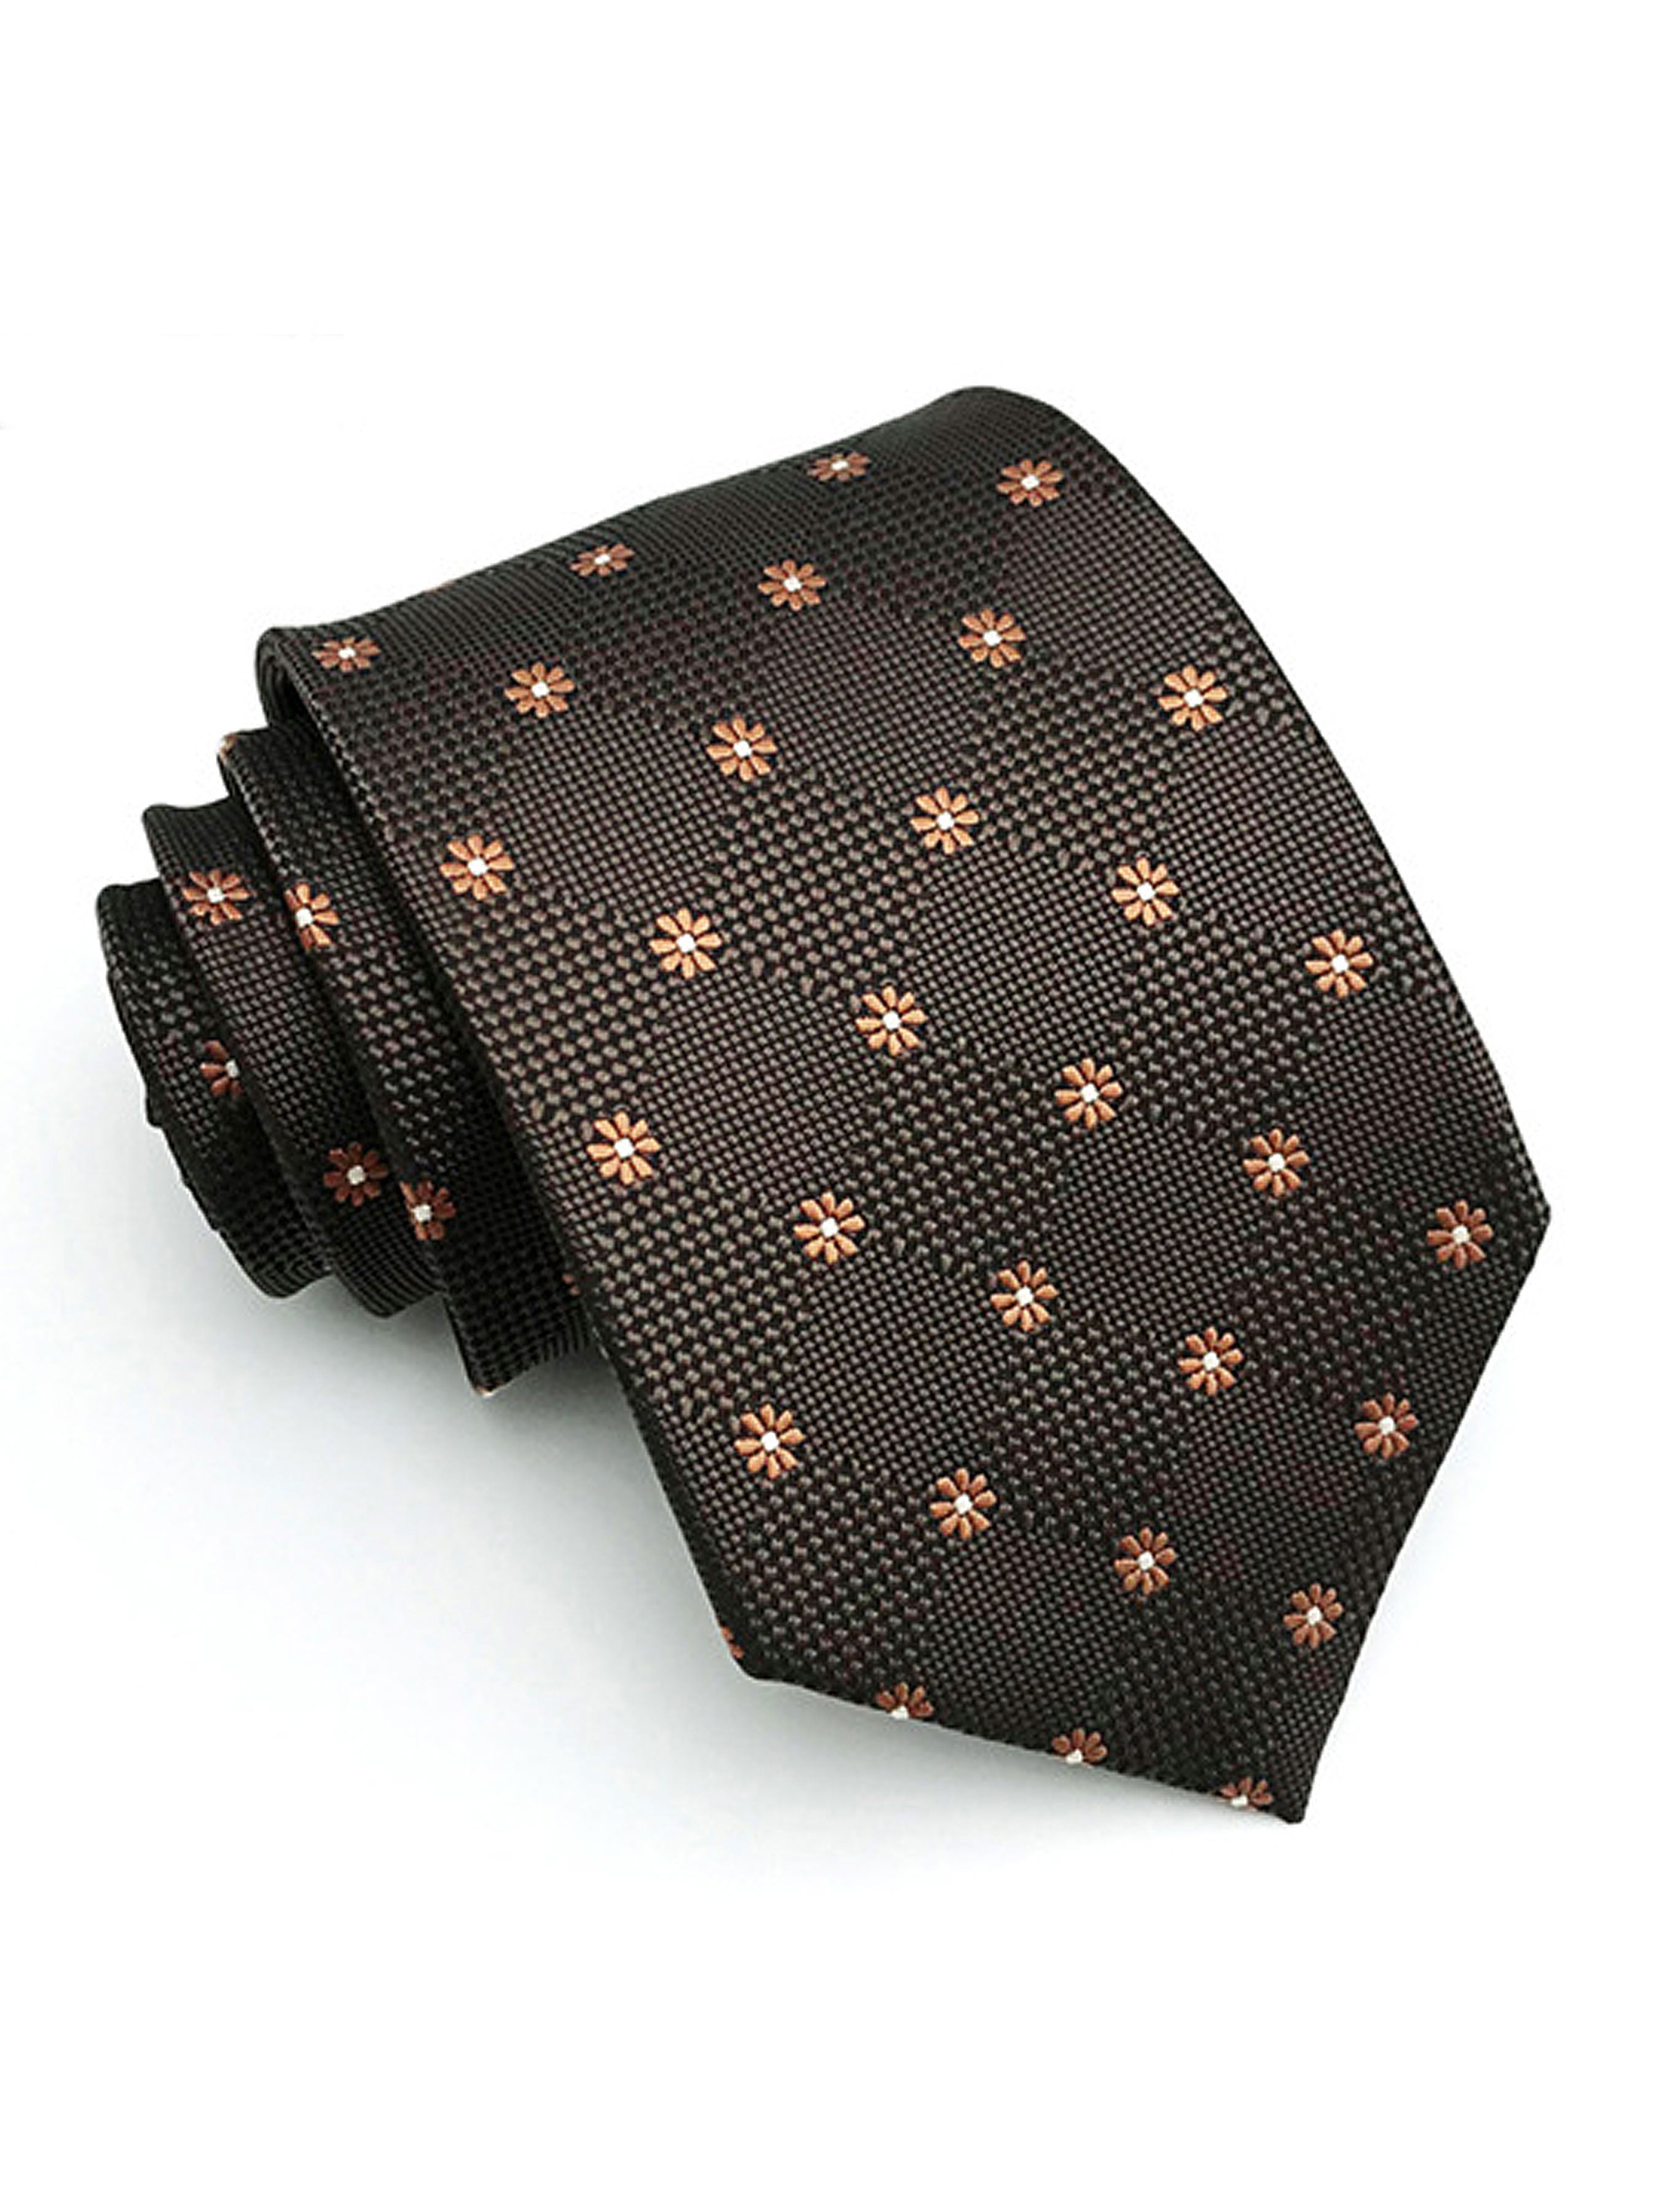 Floral Medallion Tie - Dark Brown - Zeve Shoes